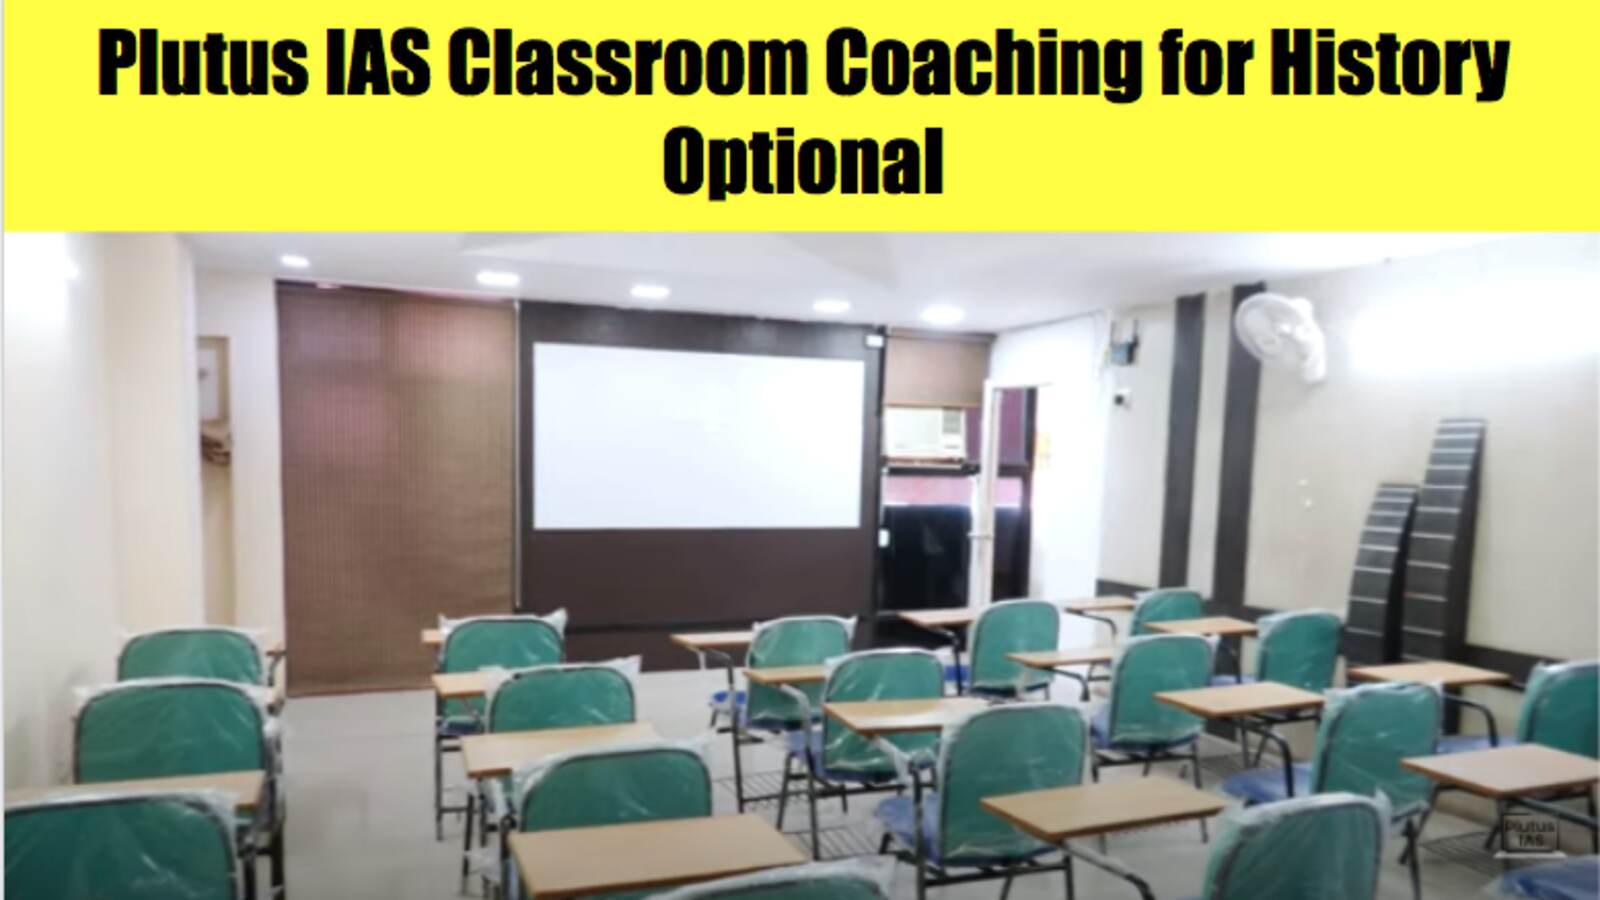 Plutus IAS Classroom coaching for History optional